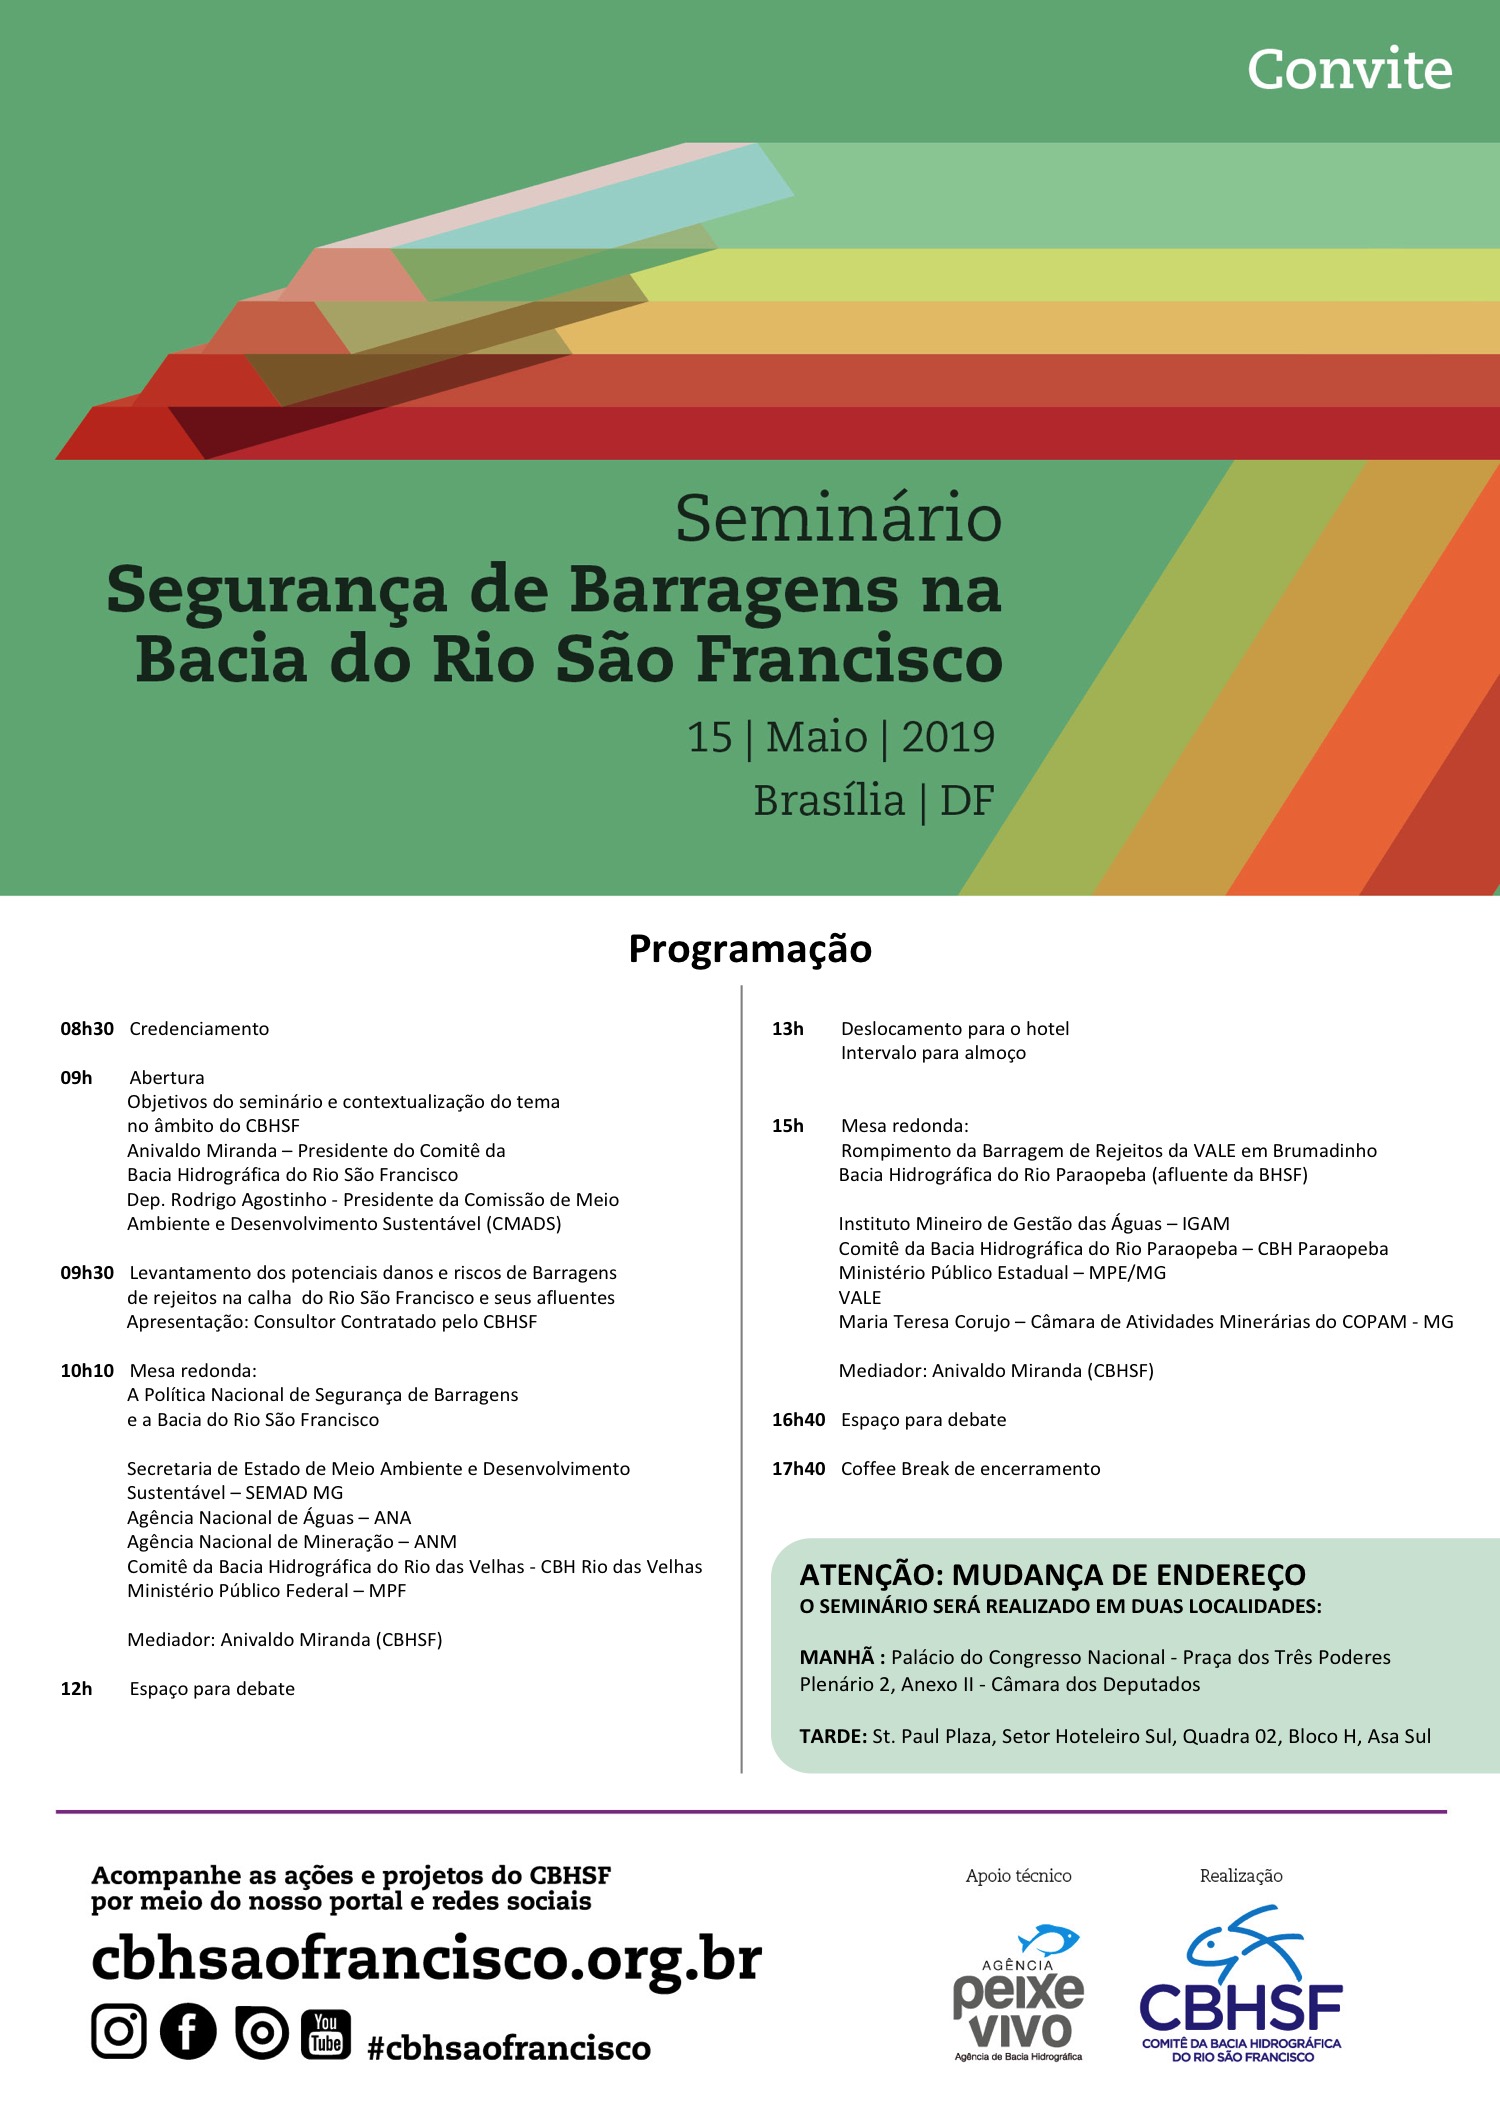 http://2017.cbhsaofrancisco.org.br/2017//box/uploads/2019/04/Programacao-Seminario-Segurança-Barragens.pdf